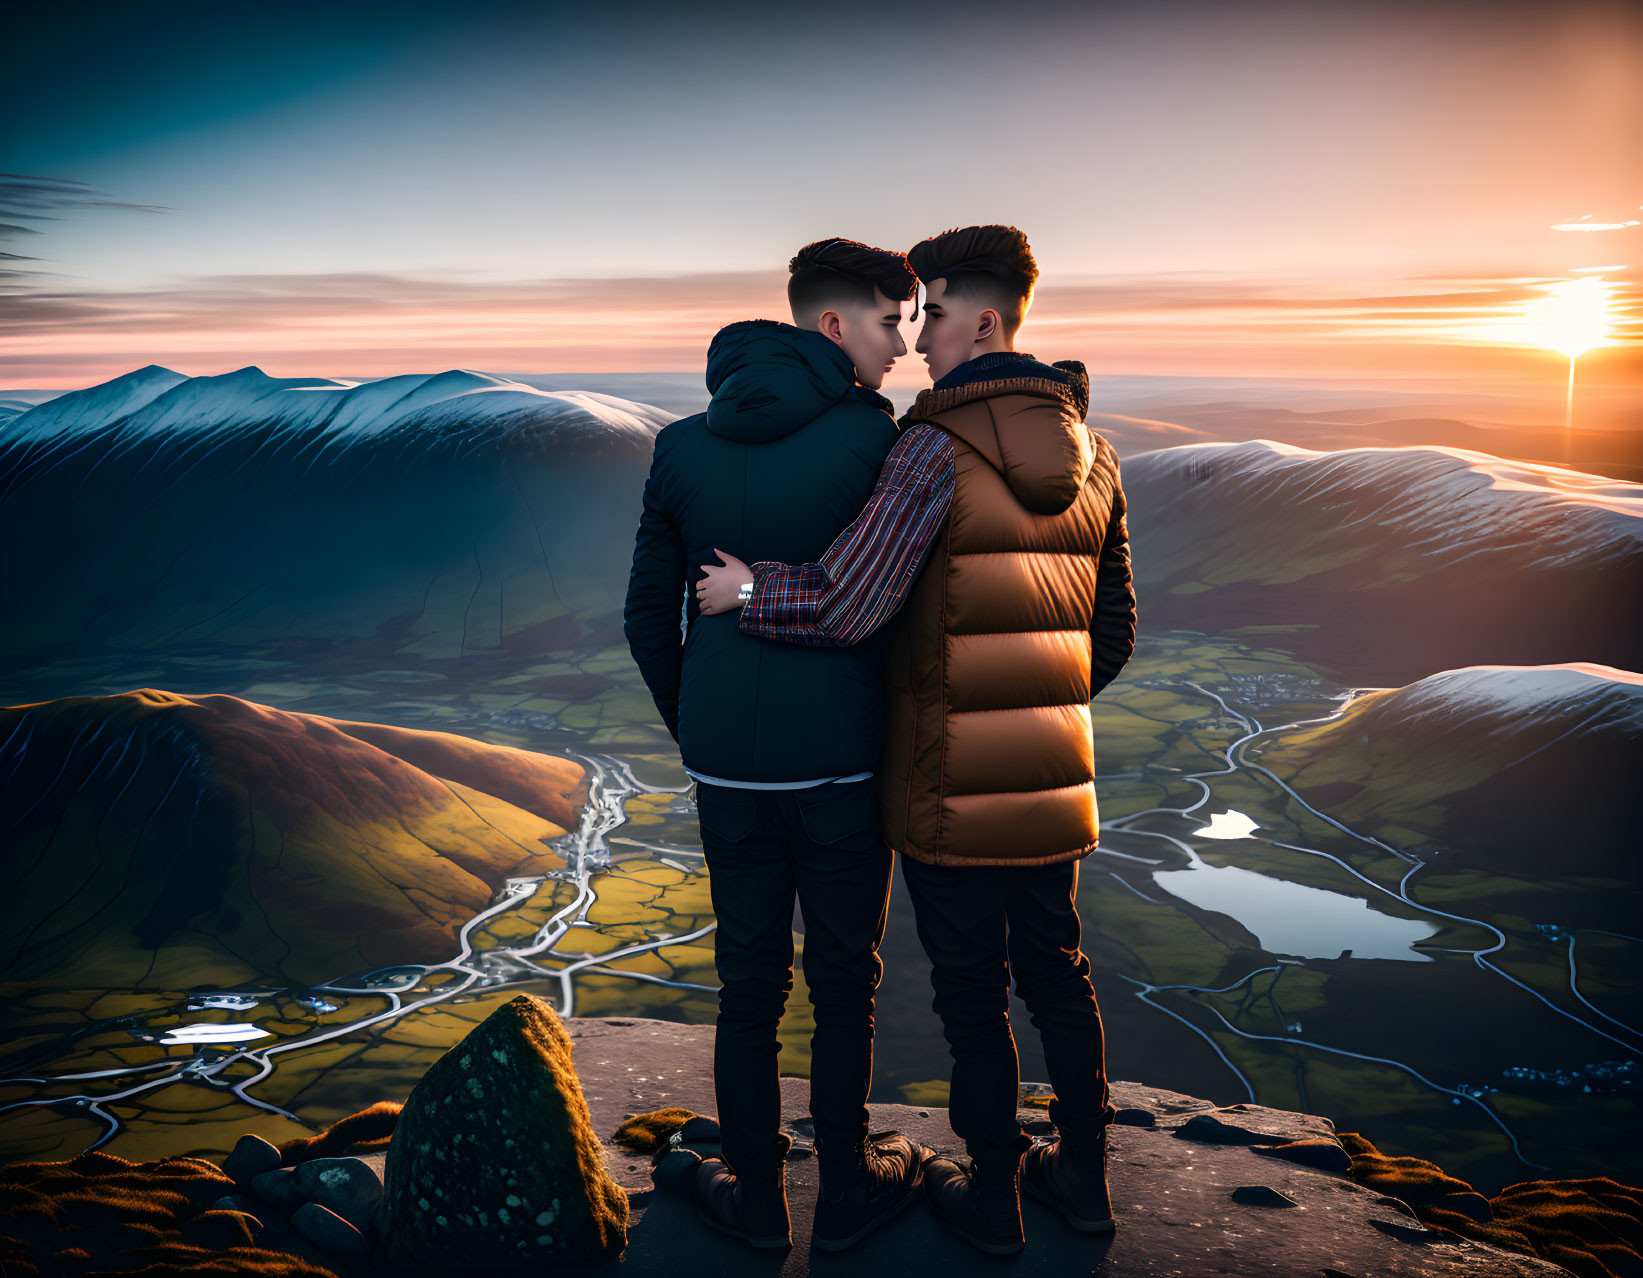 Couple embracing at sunrise over mountain landscape